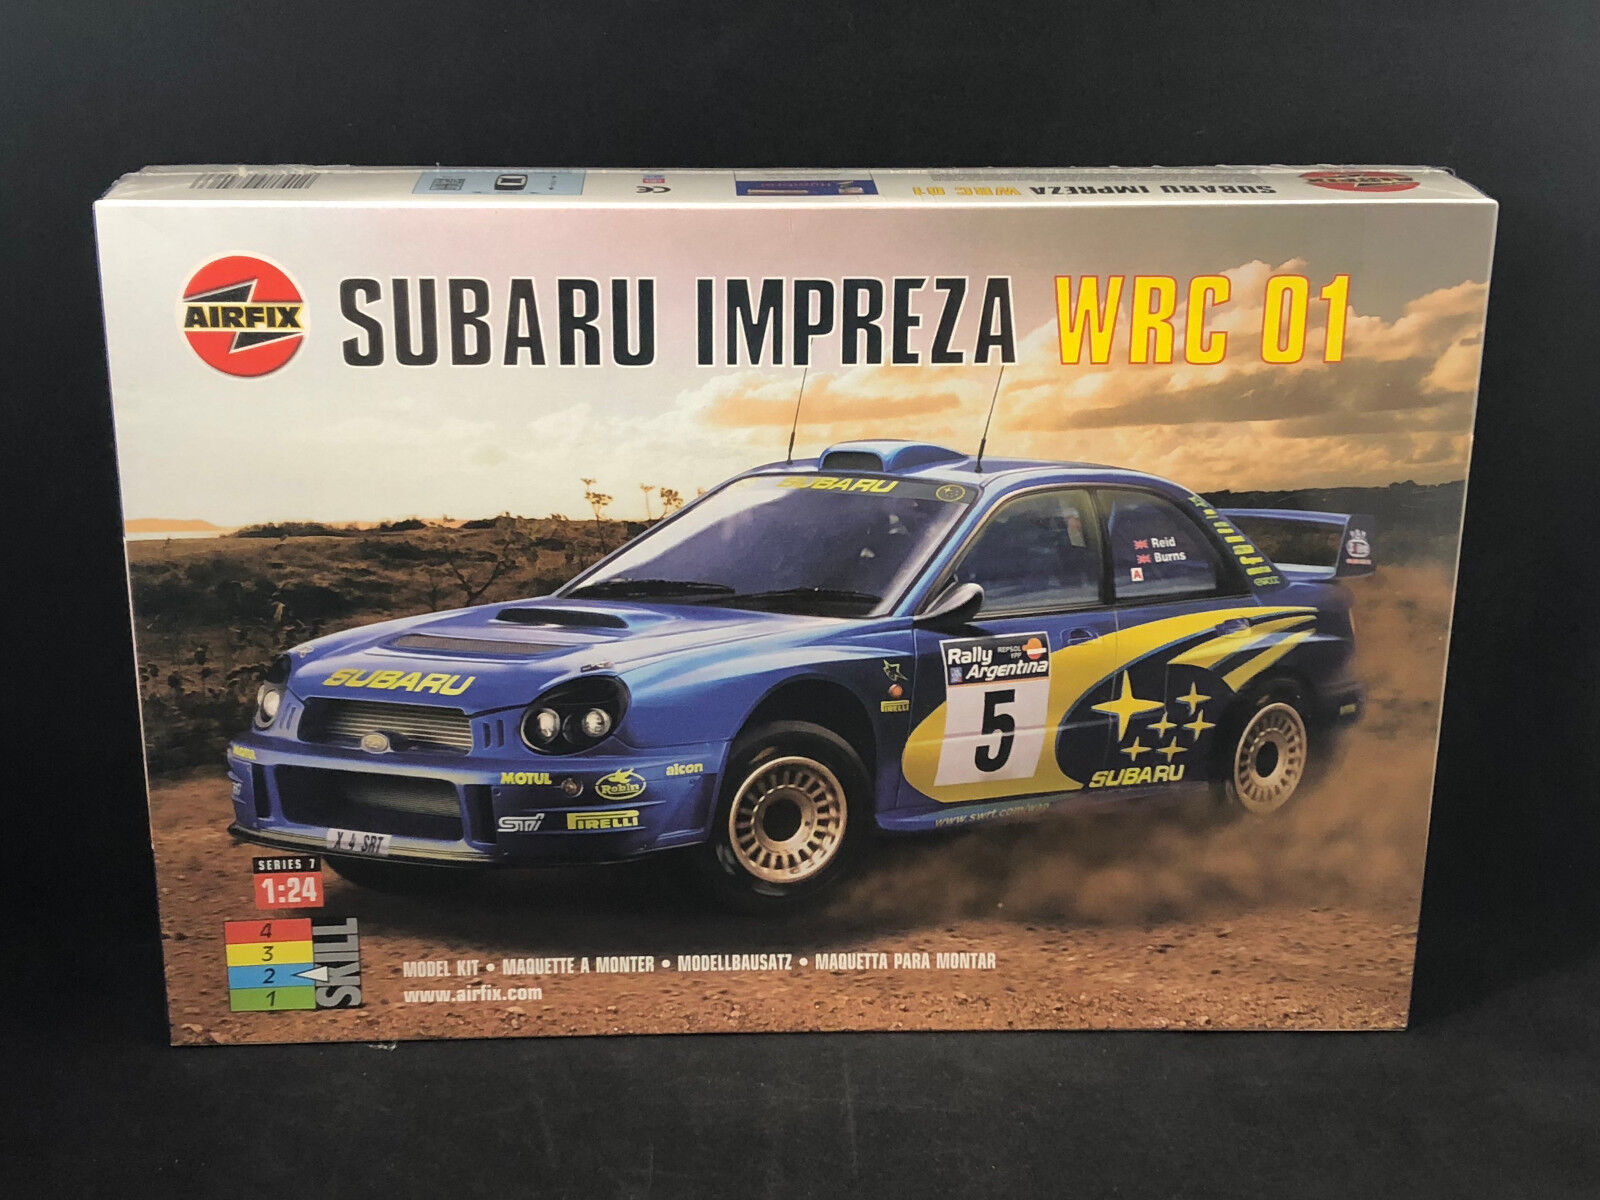 Airfix Subaru Impreza WRC 01 1:24 Scale Plastic Model Kit 07406 New in Box